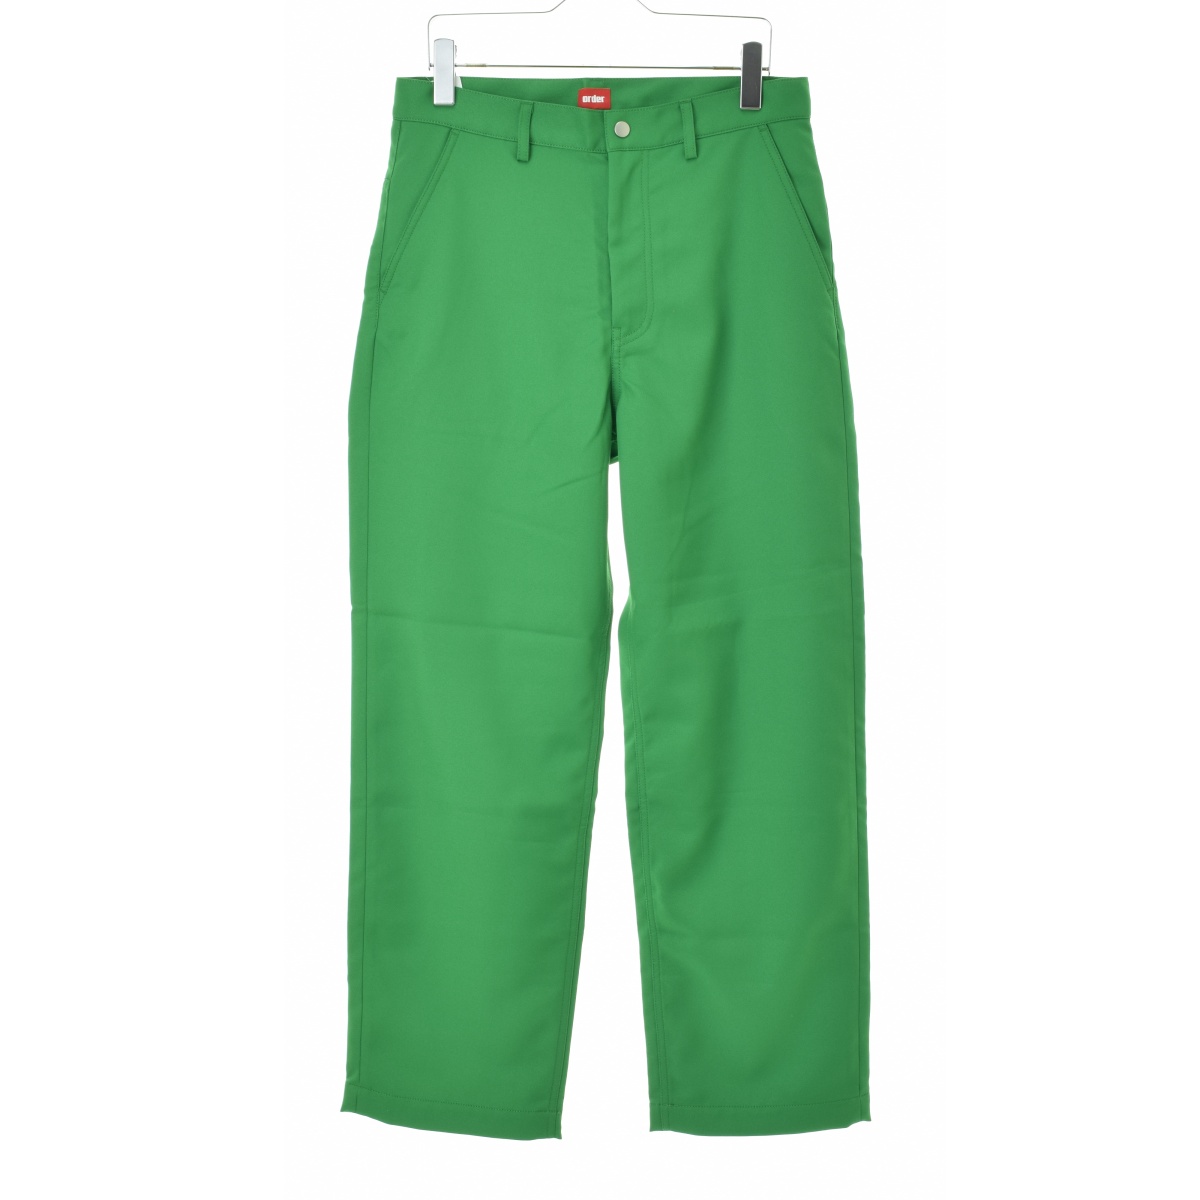 order / θorder-002-3 loose twill pants 롼ĥѥġרܺٲ